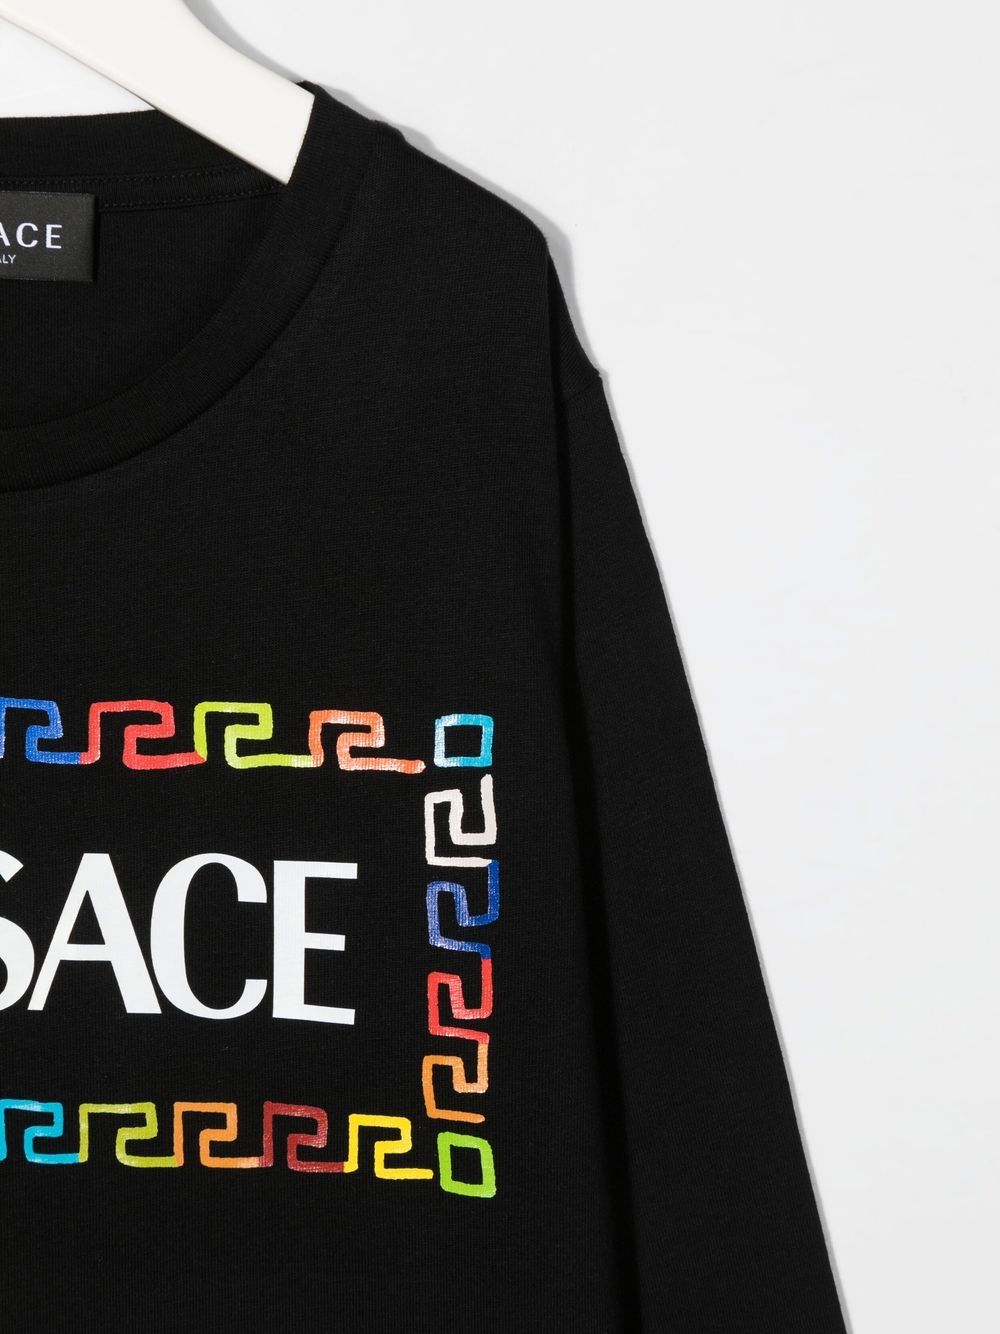 Versace Kids Black Greca Color T-shirt